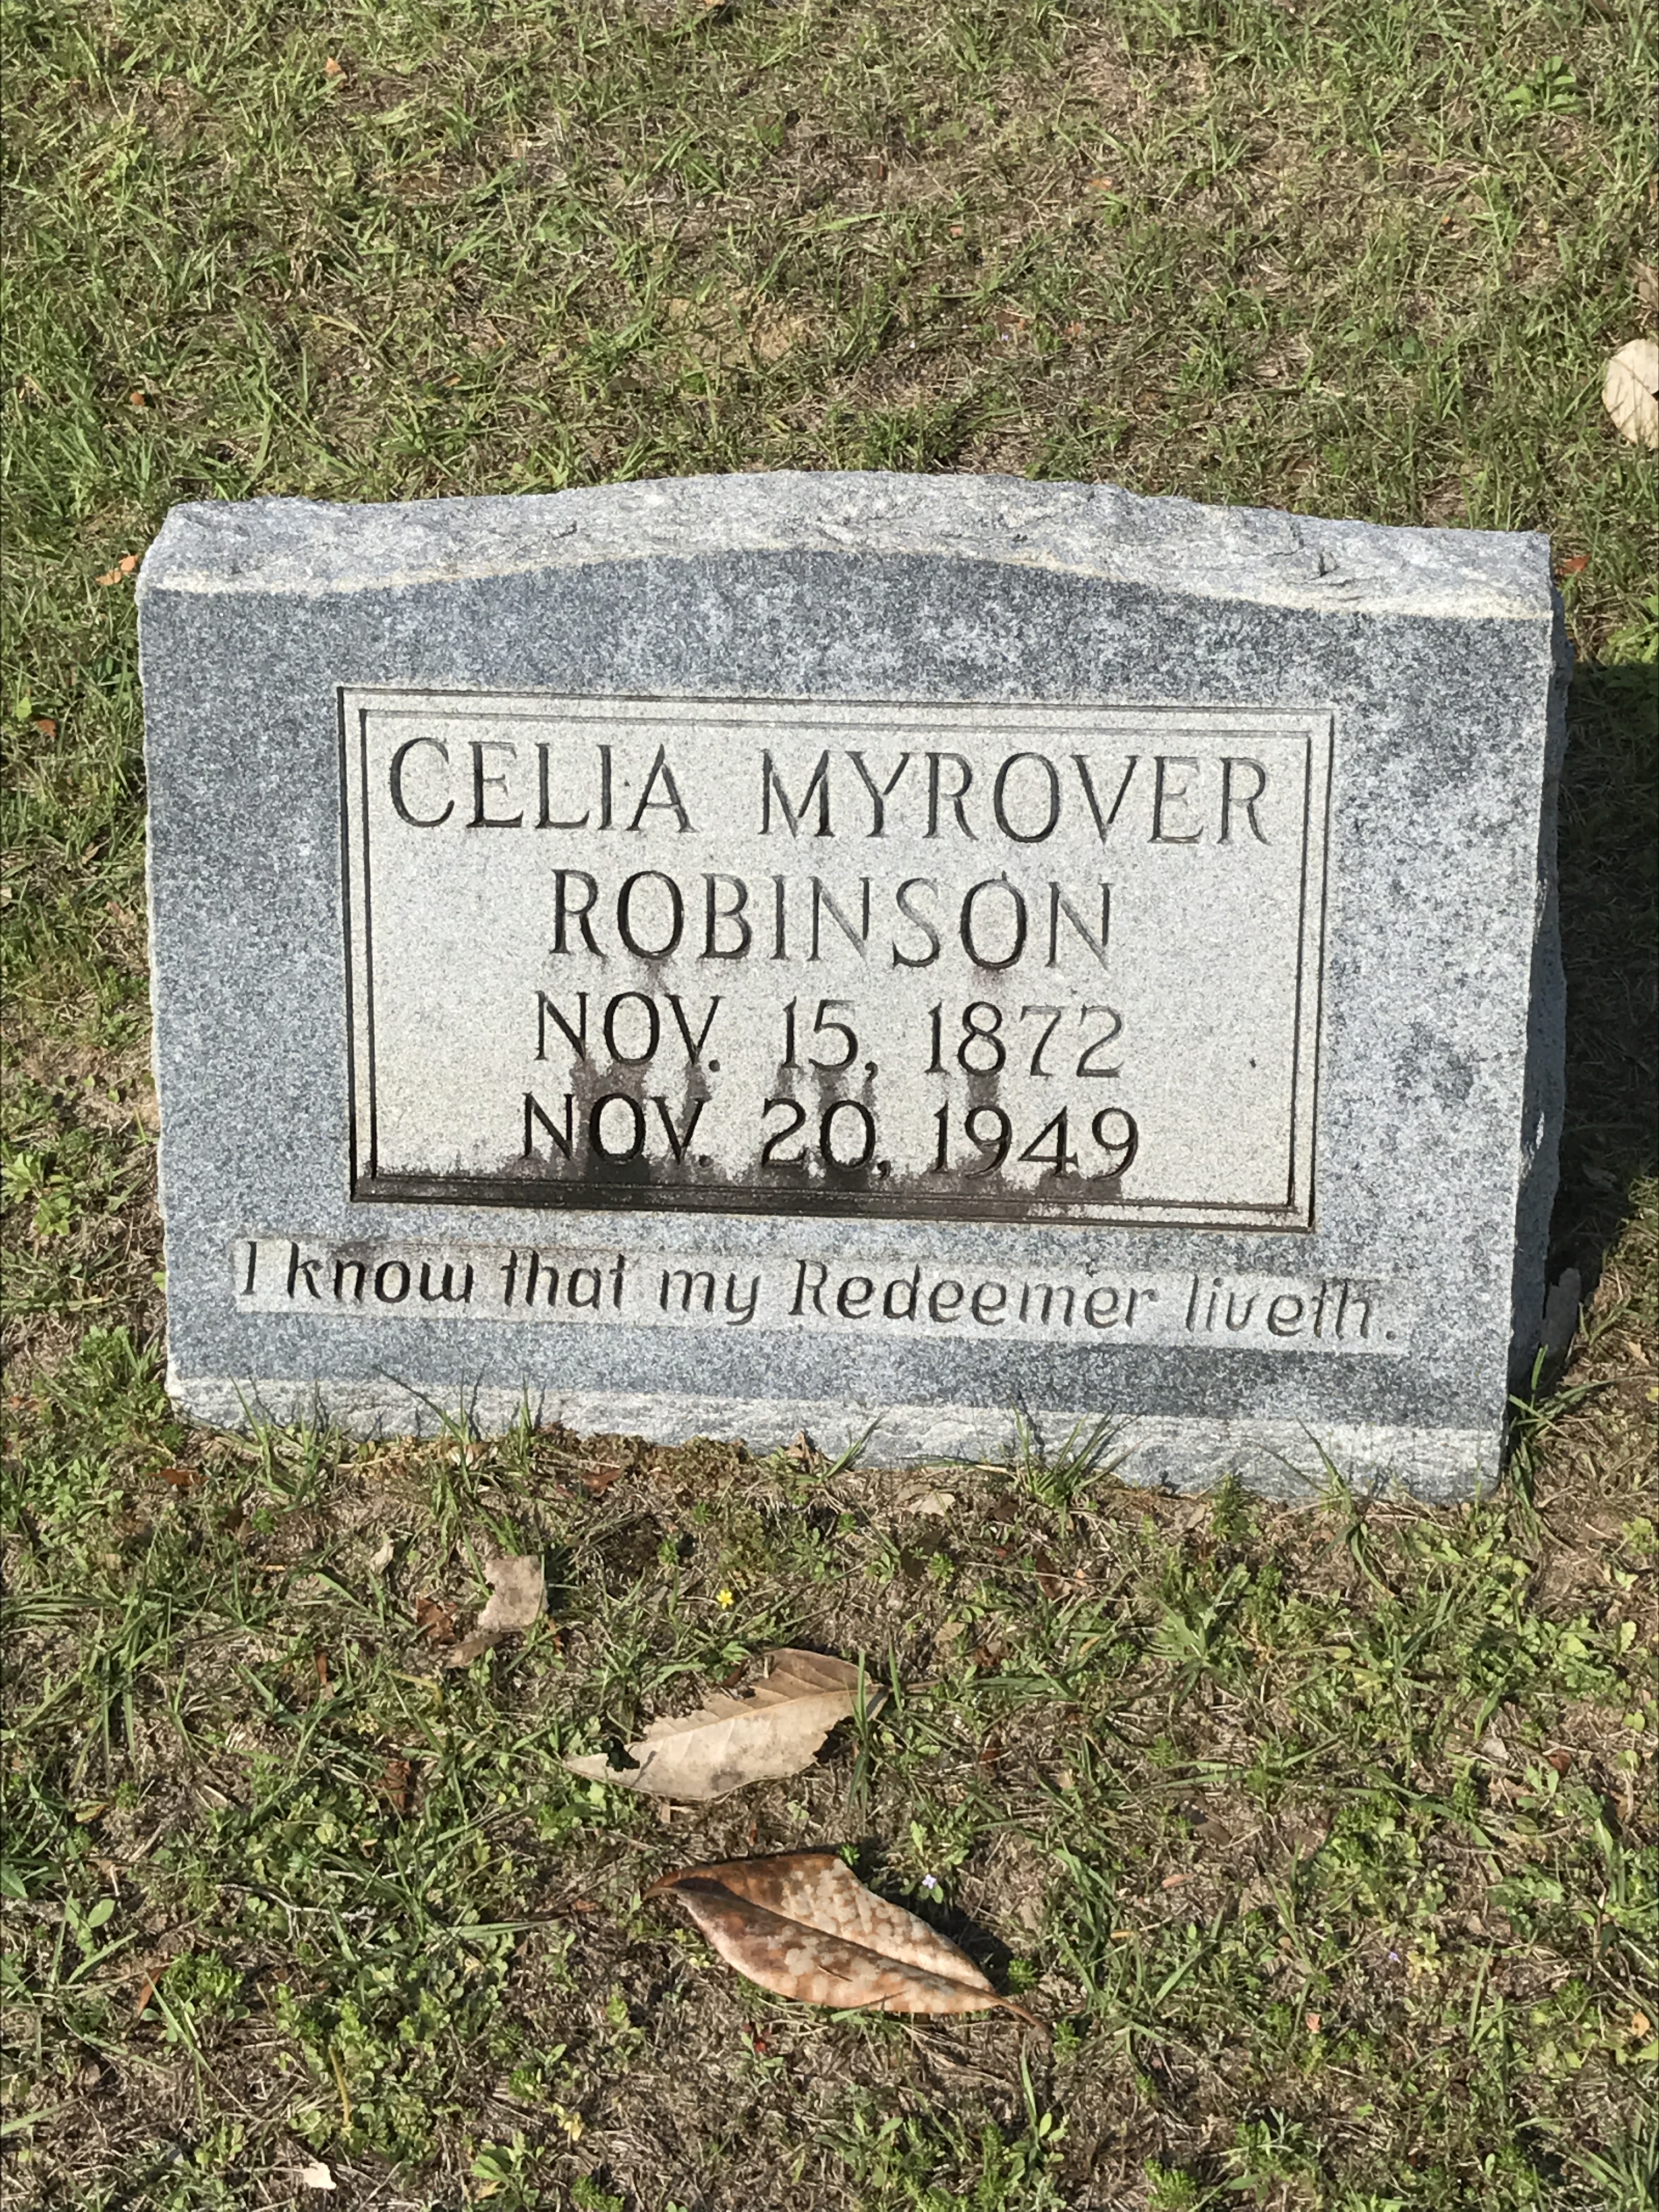 Celia Myrover Robinson